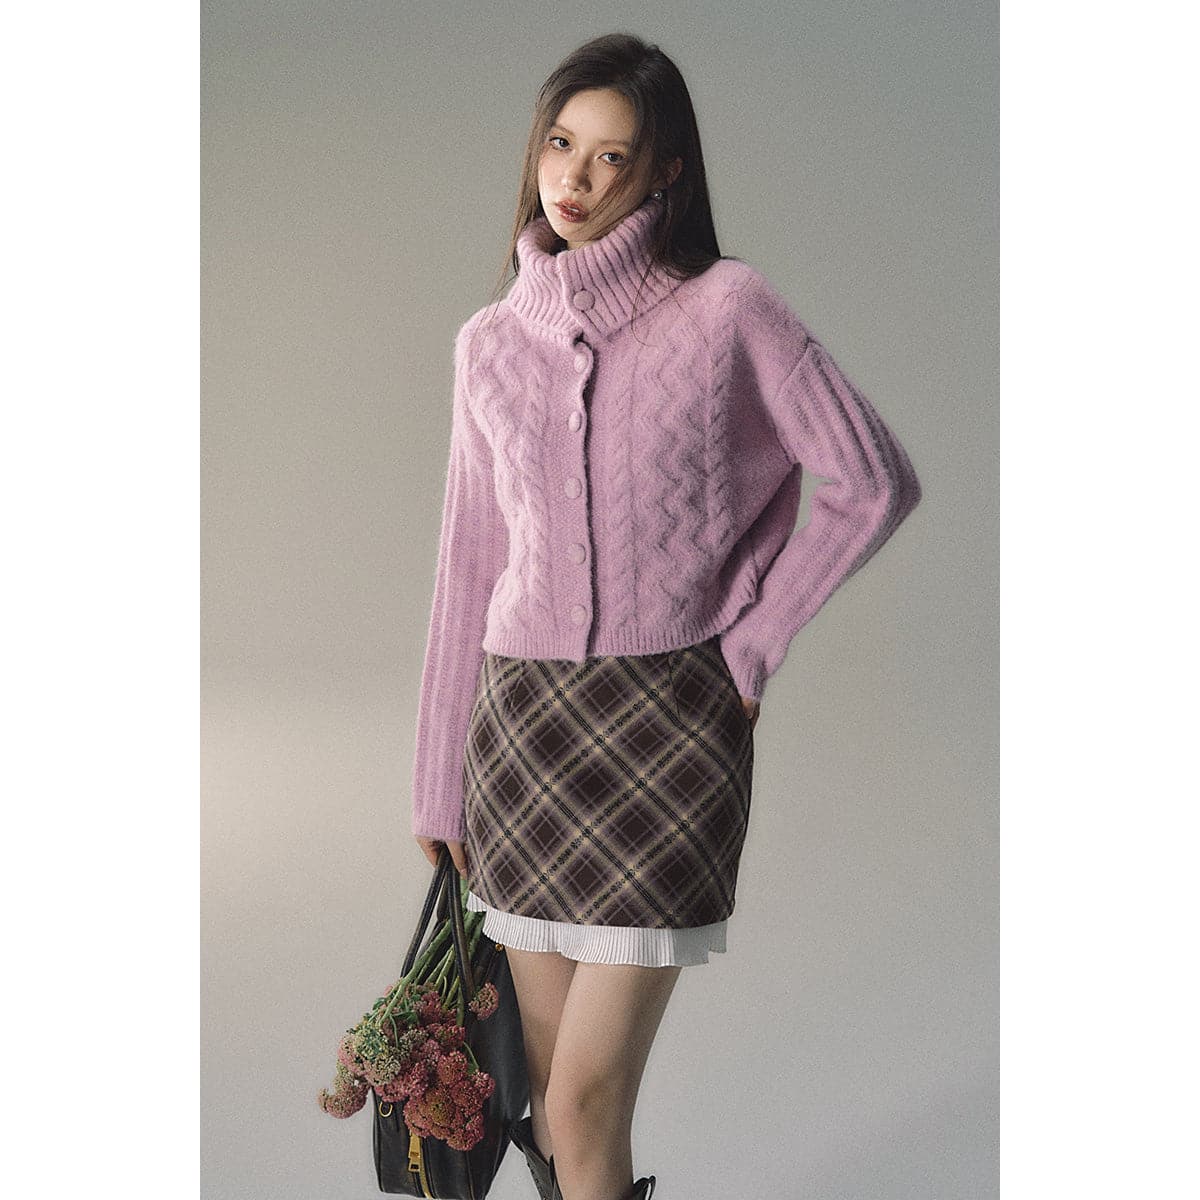 Checkered Mini Skirt - Brown Color Blocking - chiclara